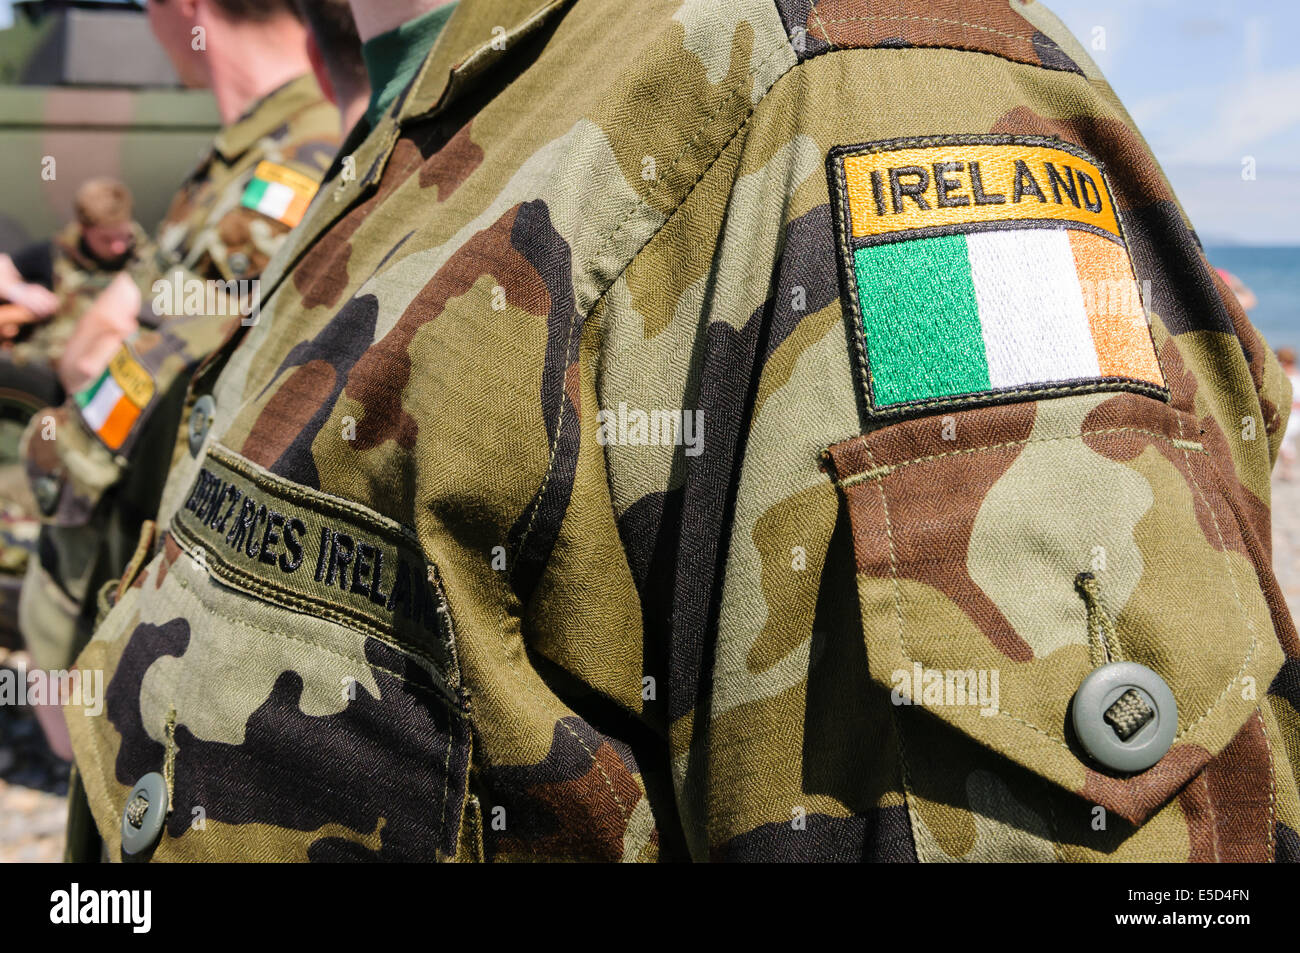 Vintage ARMY PATCHES Military Shoulder Insignia Uniform U.S. Pick a Patch C  